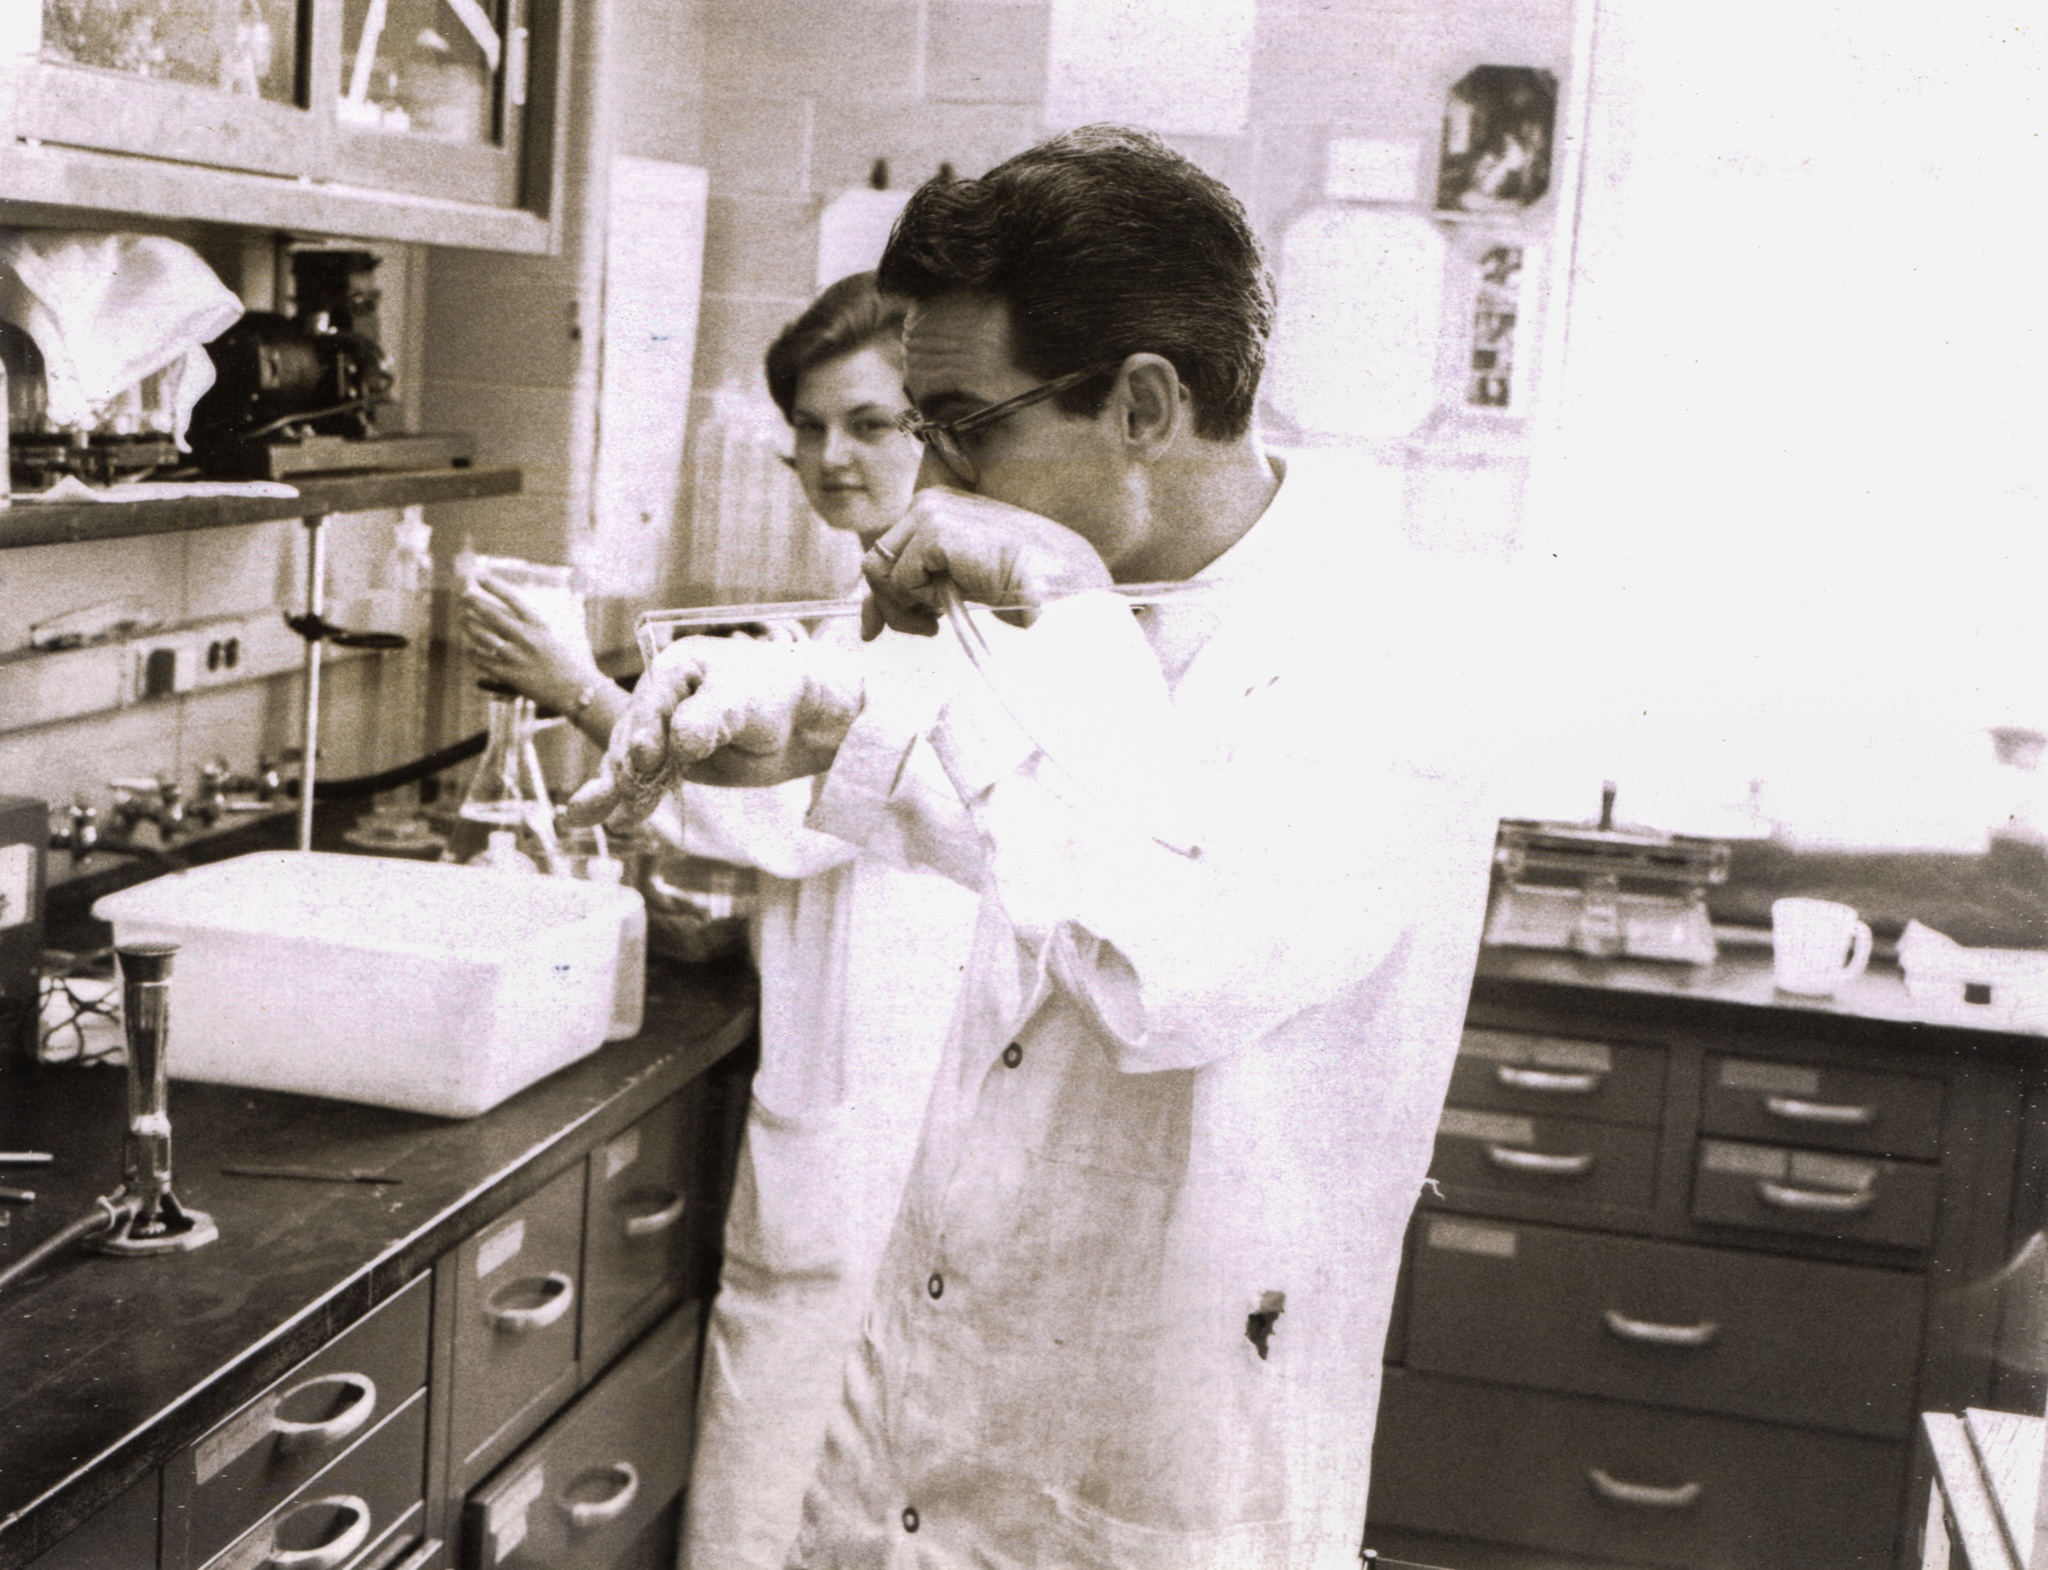 Dr. Finlayson and lab technician Mary Ann Dalton Repass in 1966 in Building 29